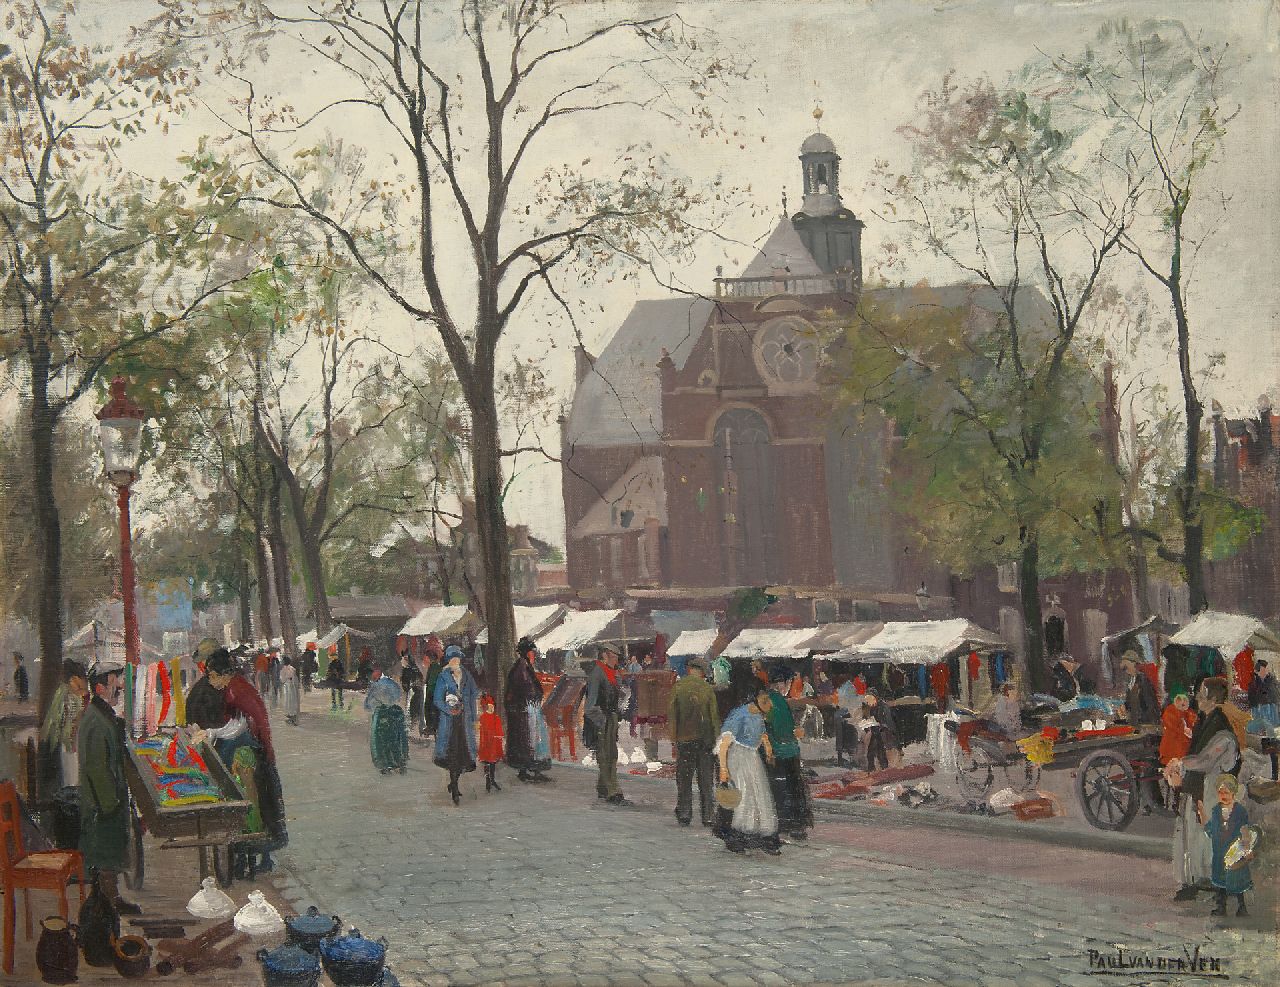 Ven P.J. van der | 'Paul' Jan van der Ven | Paintings offered for sale | Marketday on the Noordermarkt, Amsterdam, oil on canvas 84.4 x 109.8 cm, signed l.r. and on the stretcher